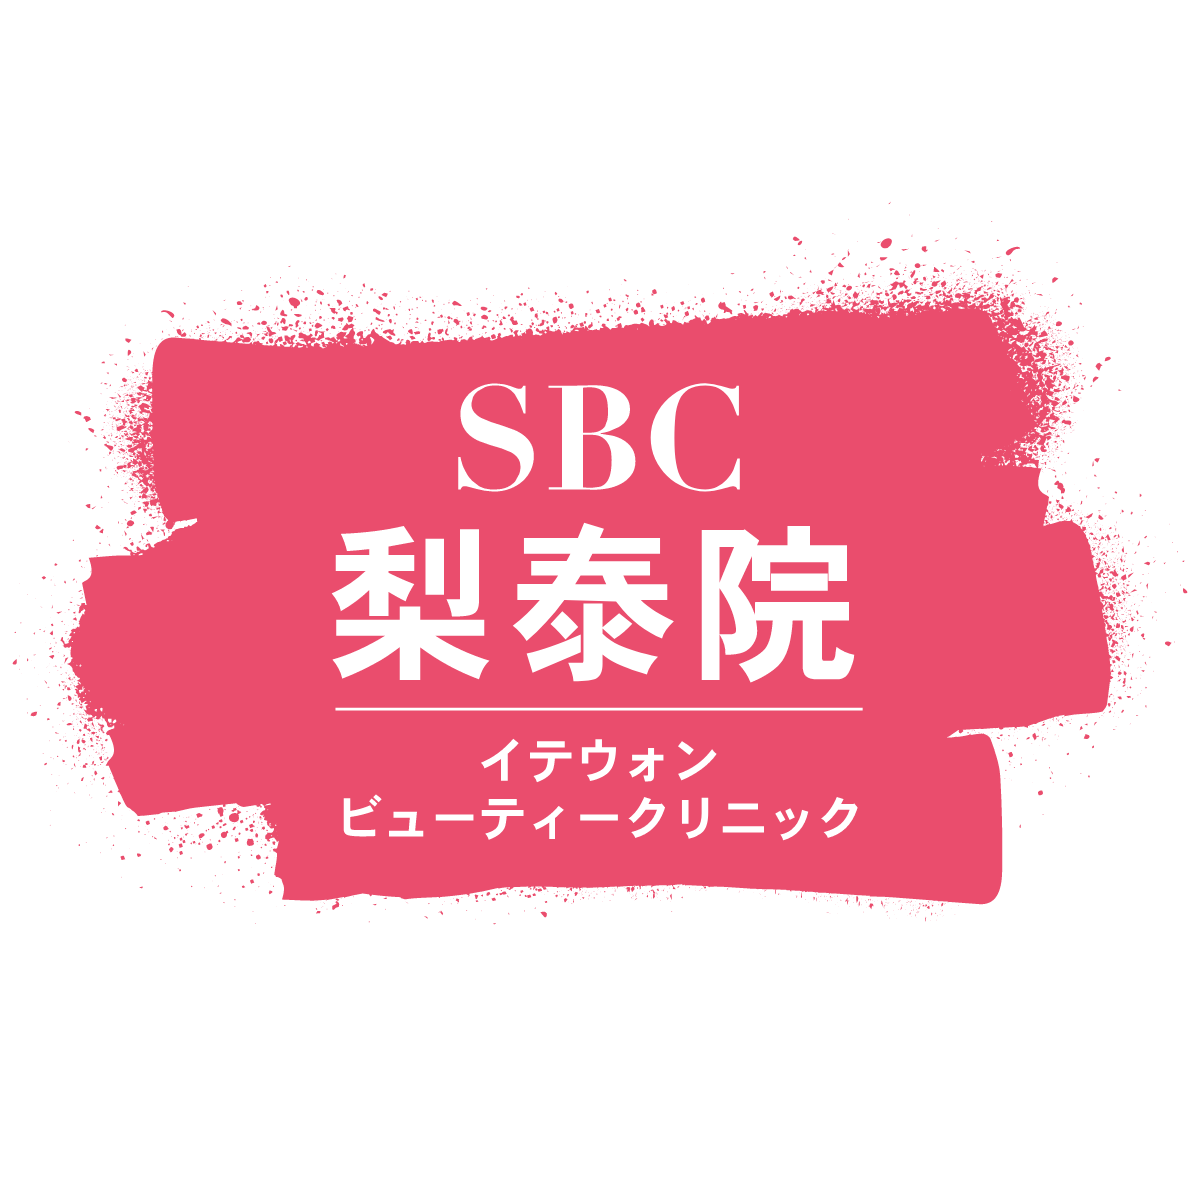 SBCイテウォンビューティークリニック大阪心斎橋 - Plastic Surgeon - 大阪市 - 0120-013-970 Japan | ShowMeLocal.com